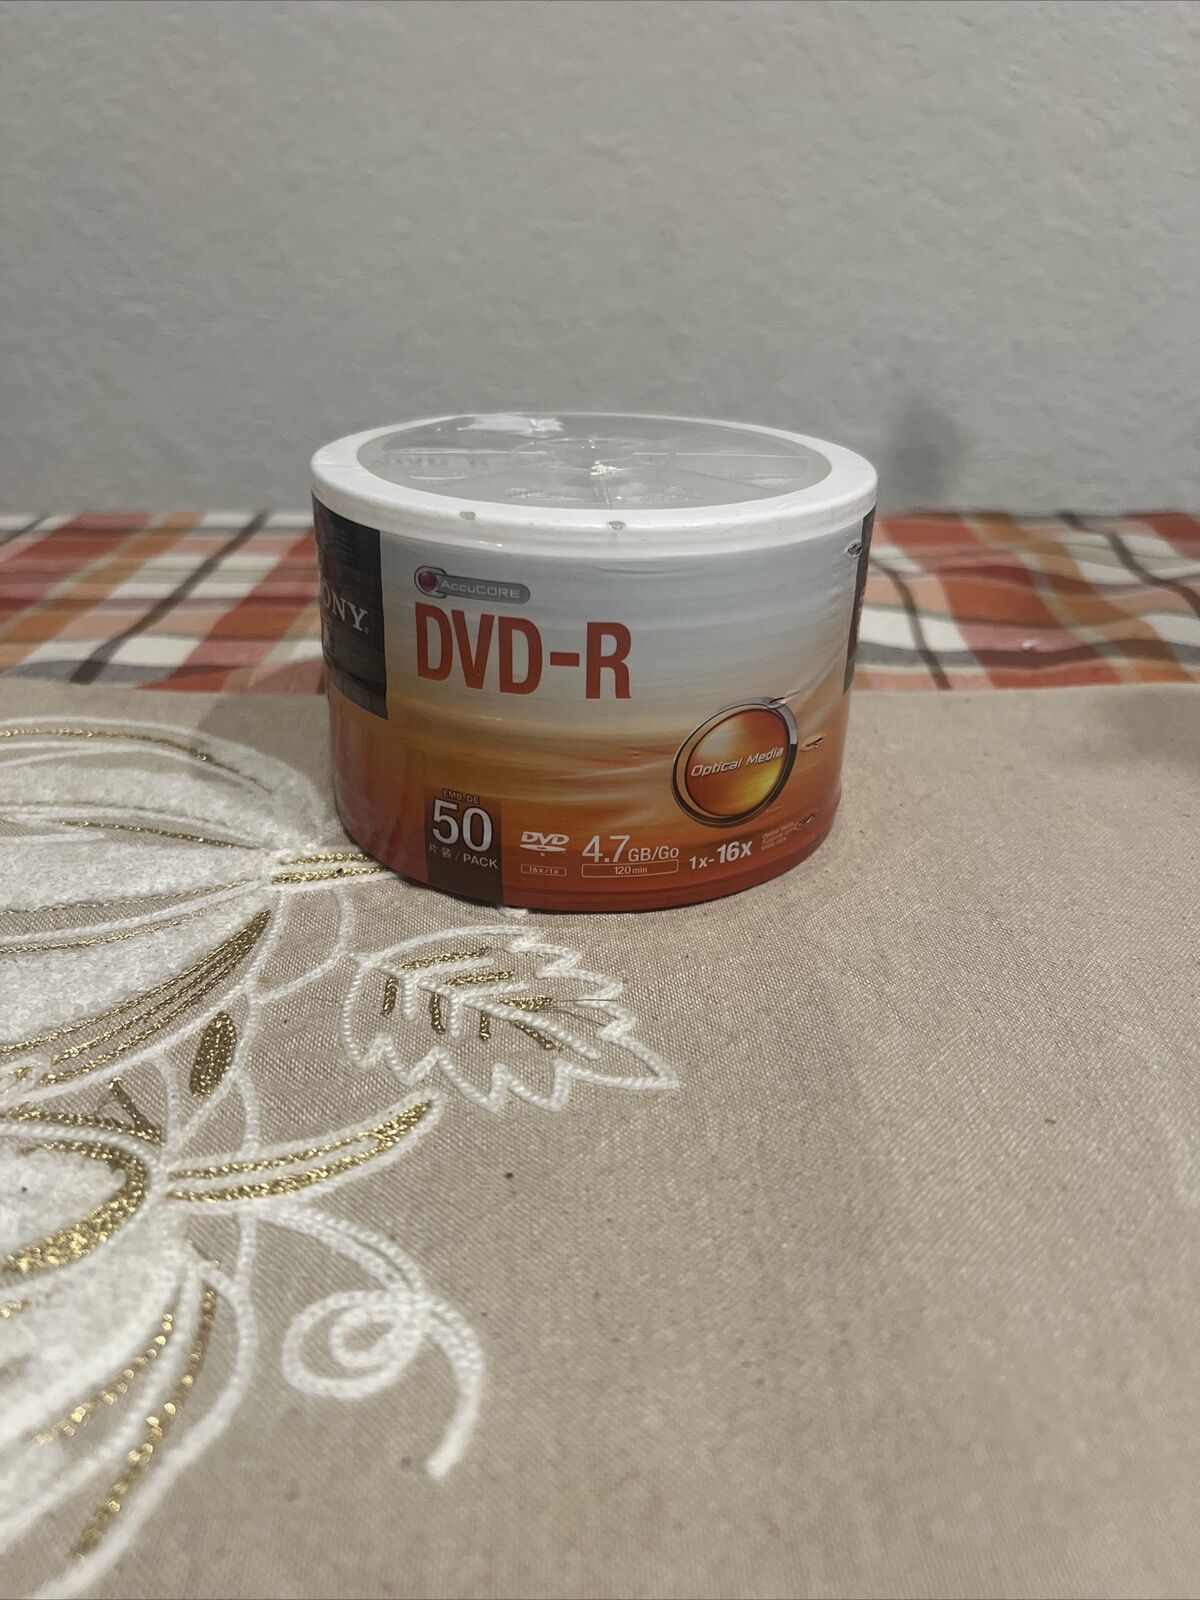 Sony 16X 4.7GB DVD-R Blank Disc - 50 Pack Brand New